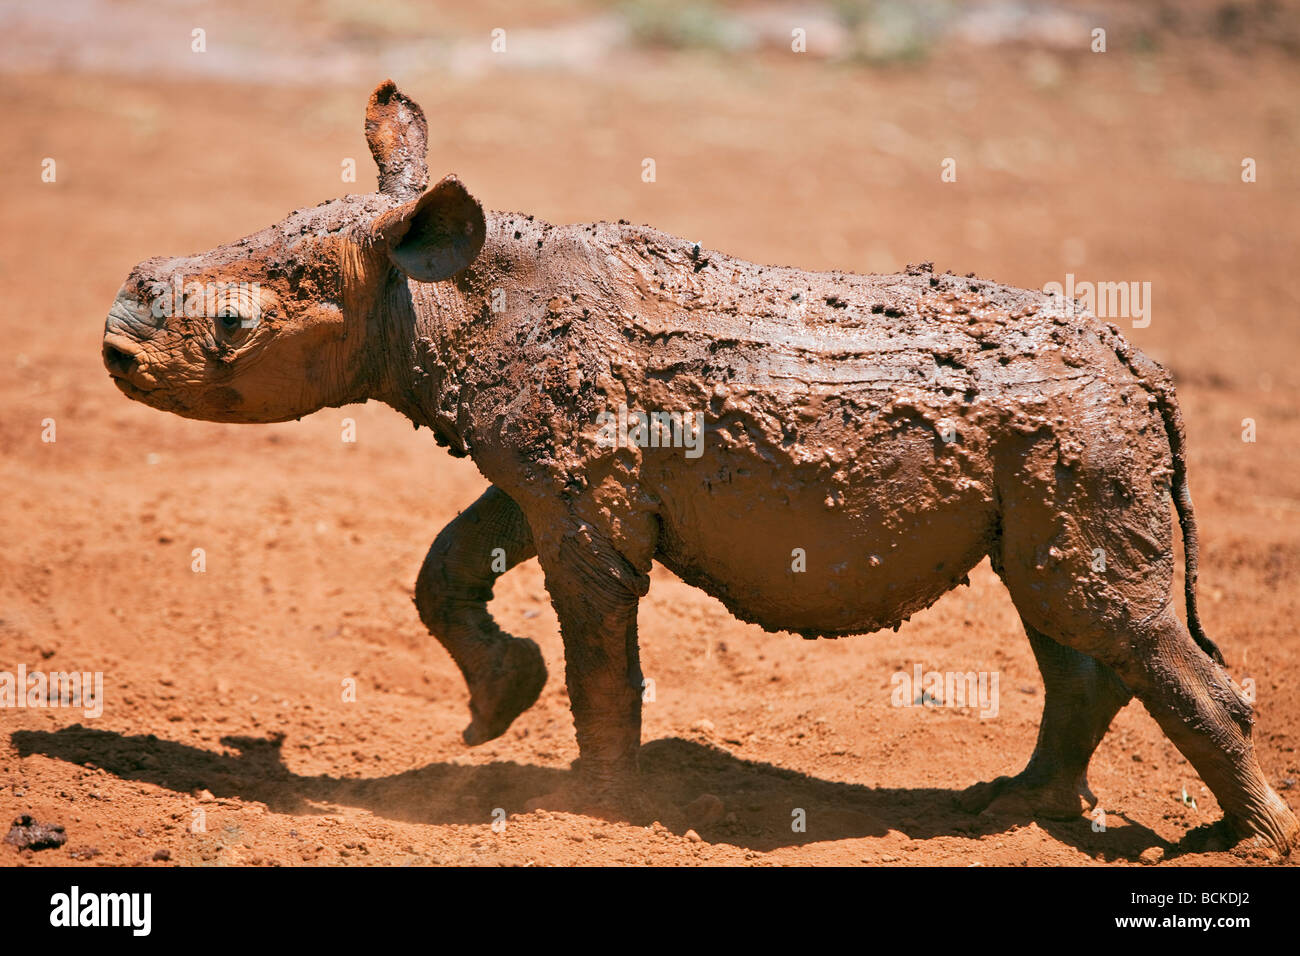 Kenya, Nairobi. An orphaned baby black rhino at the David Sheldrick Wildlife Trust in Nairobi National Park. Stock Photo